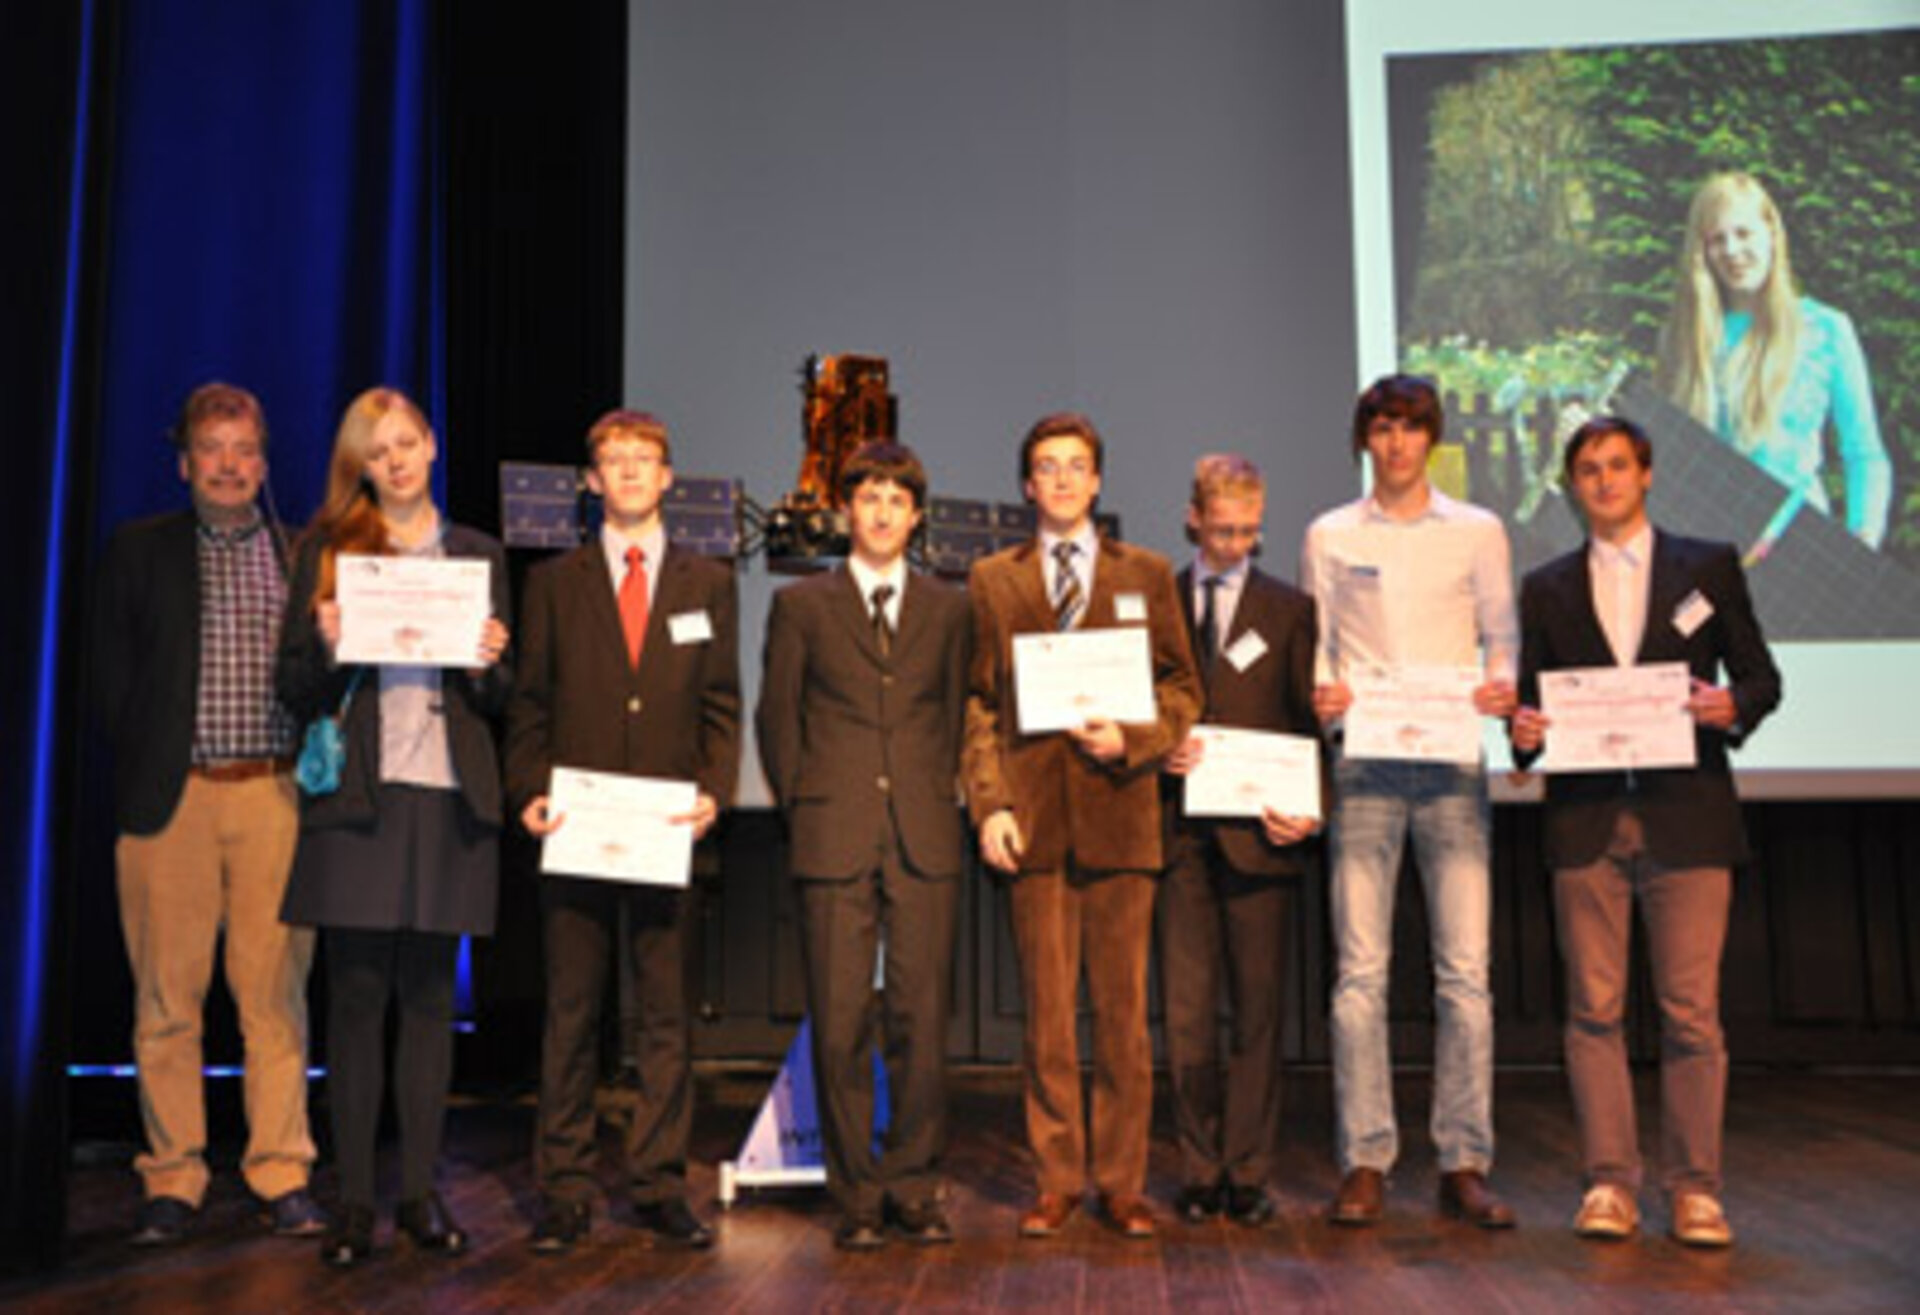 Photograph of winners